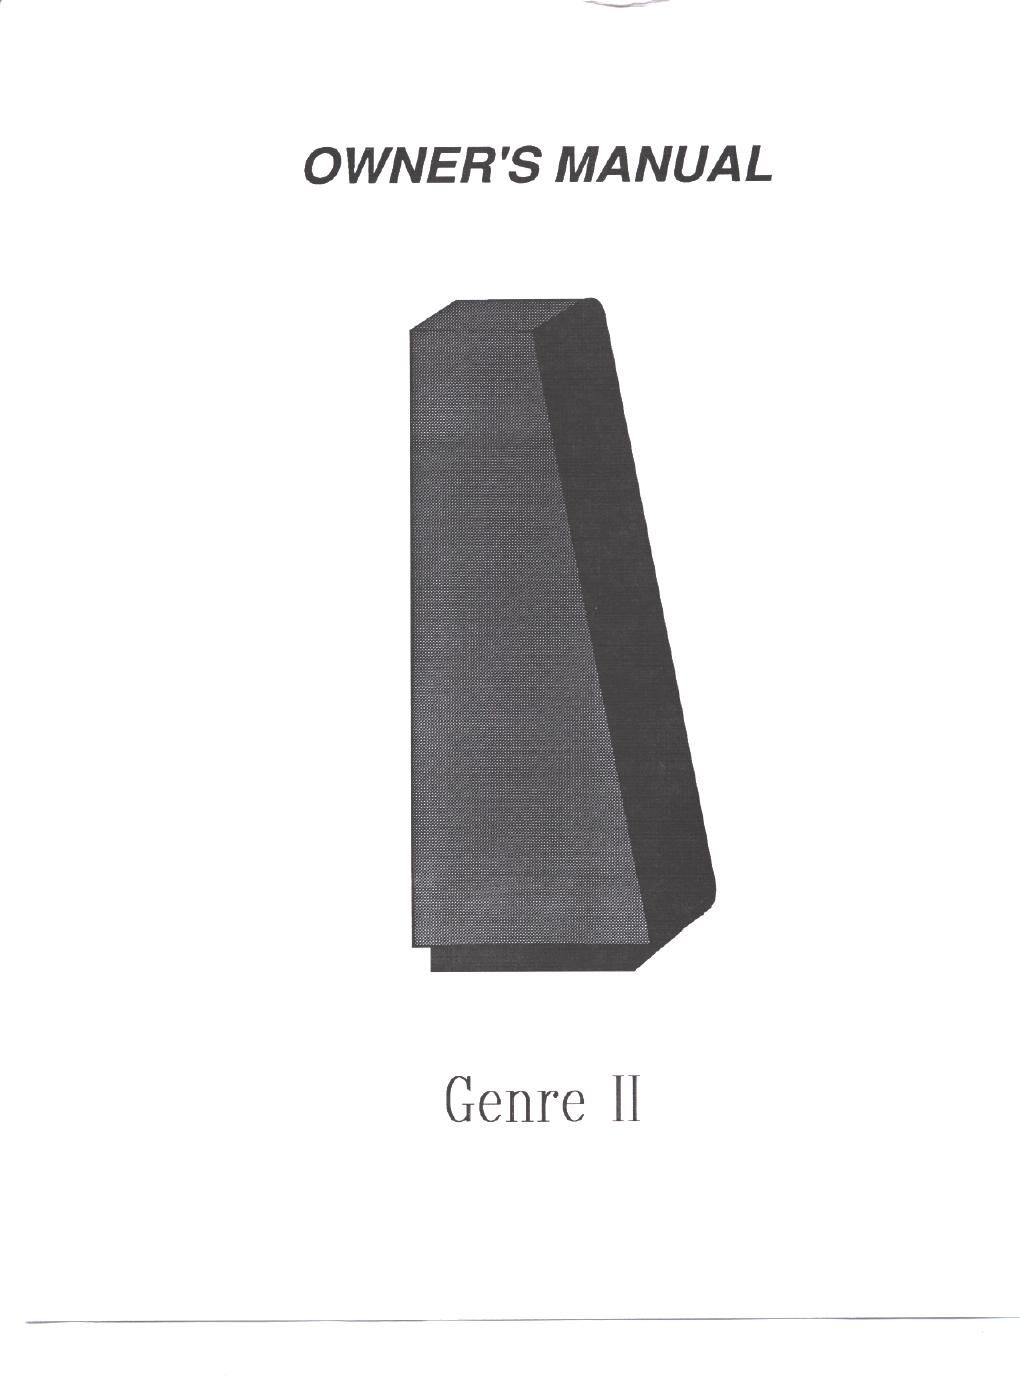 genesis genre 2 owners manual